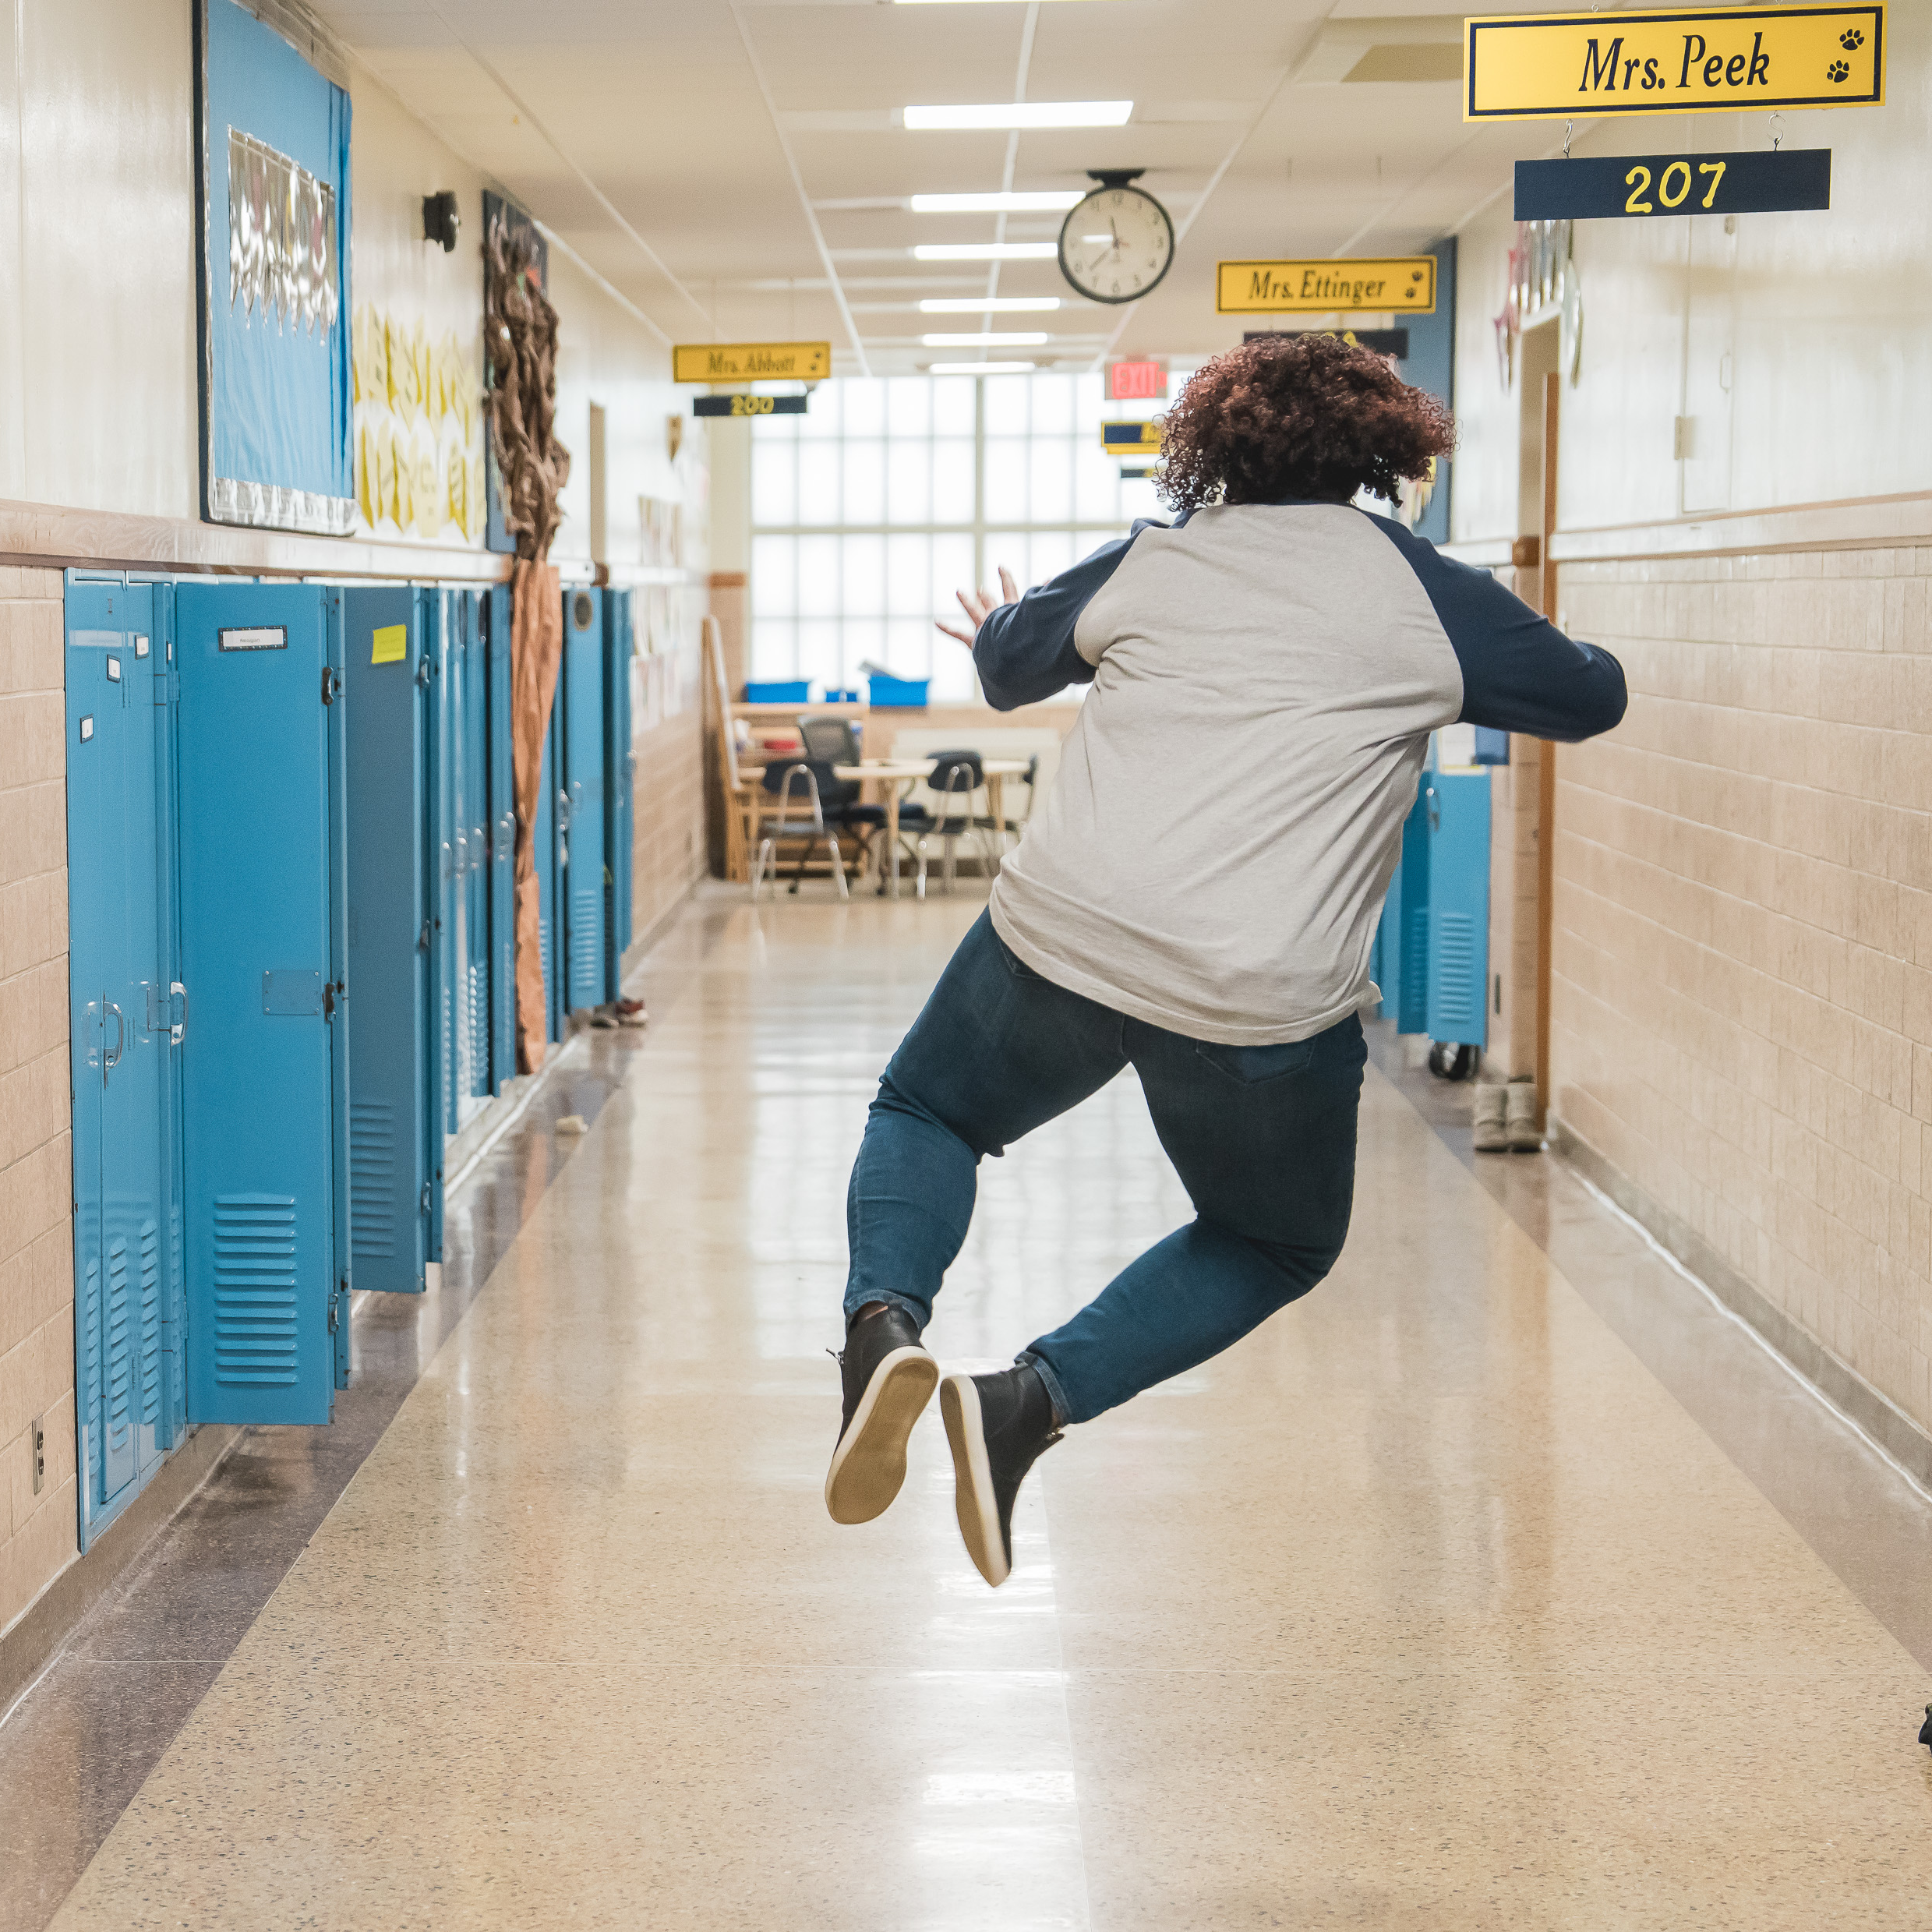 St. Joseph teacher jumping for joy in hallway